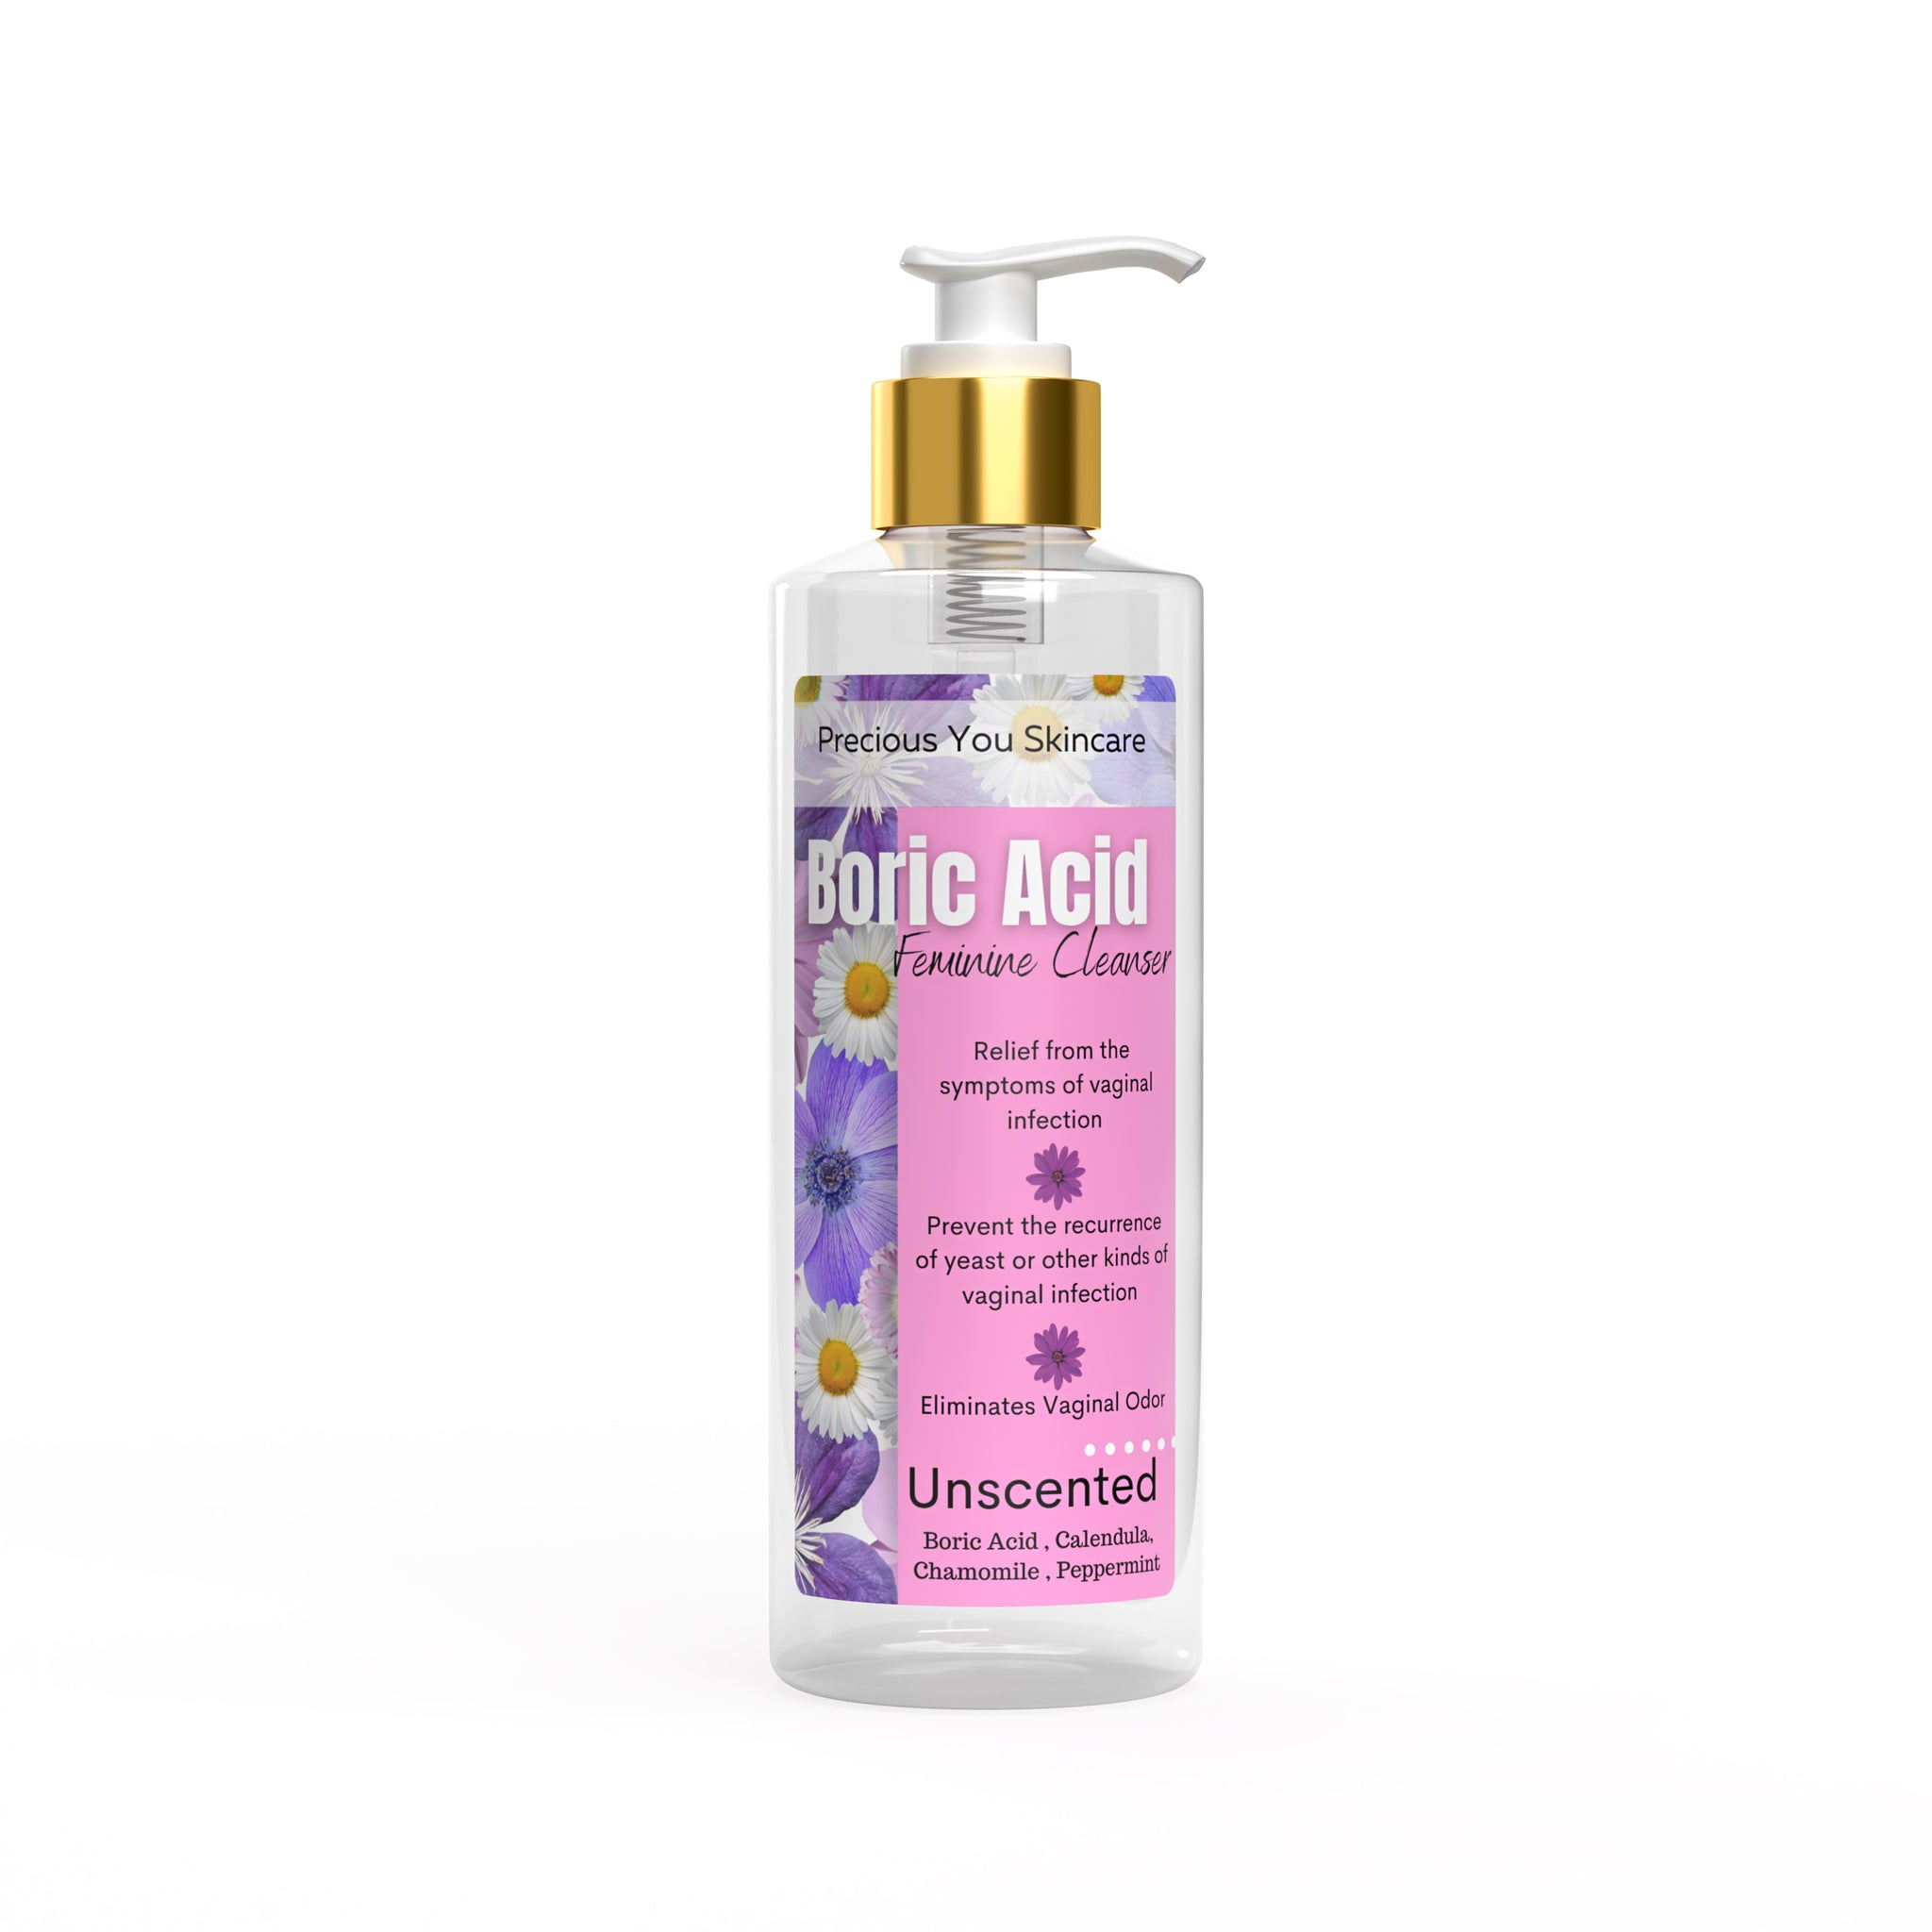 Boric Acid cleanser - Gentle unscented